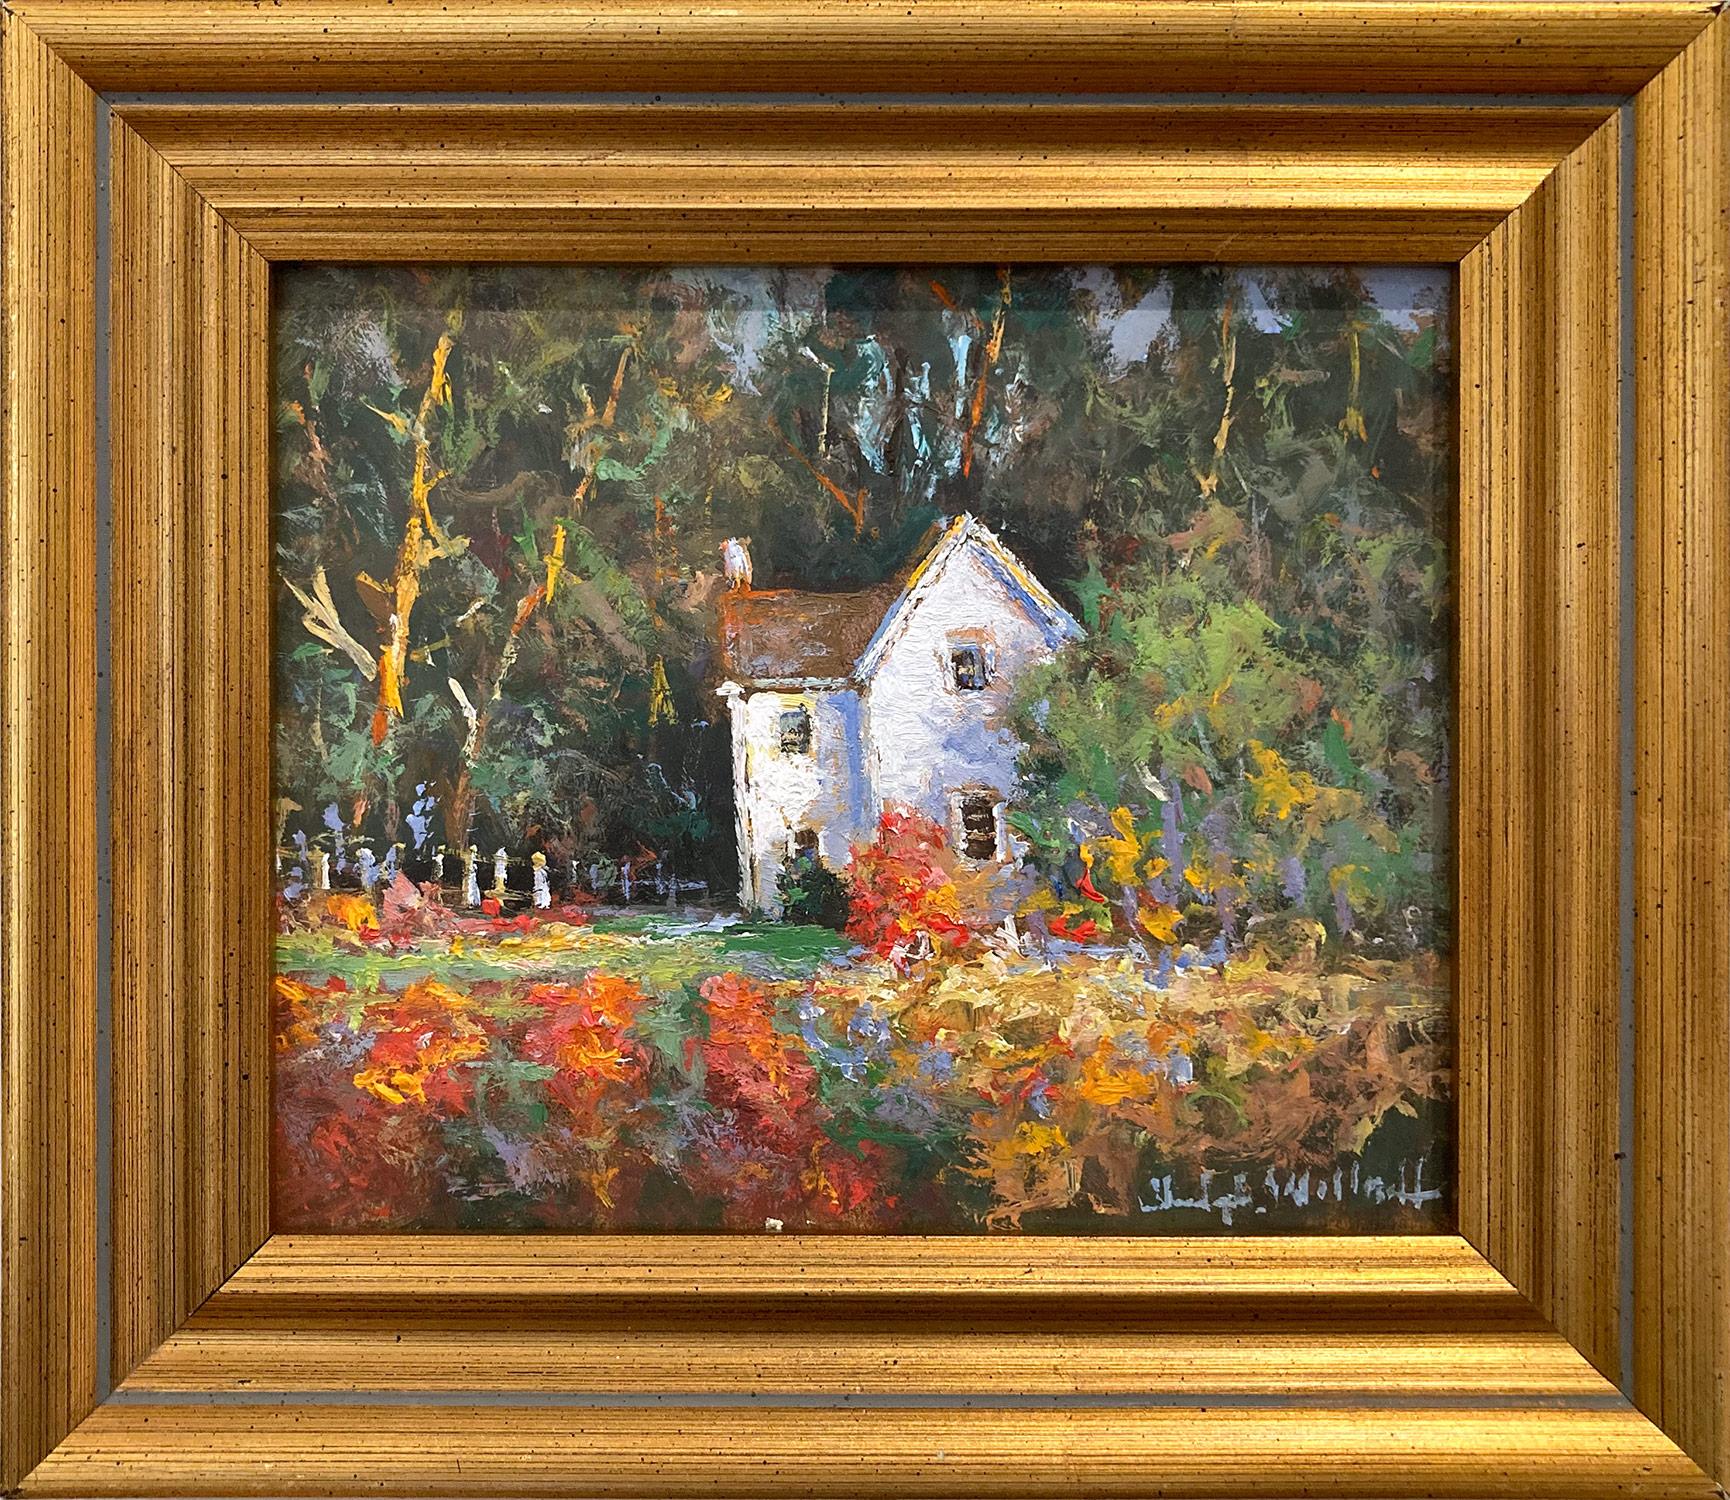 Christopher Willett Landscape Painting - "Chuck & Lynda's House by Peace Valley Park, Bucks County Pa" Autumn Landscape 